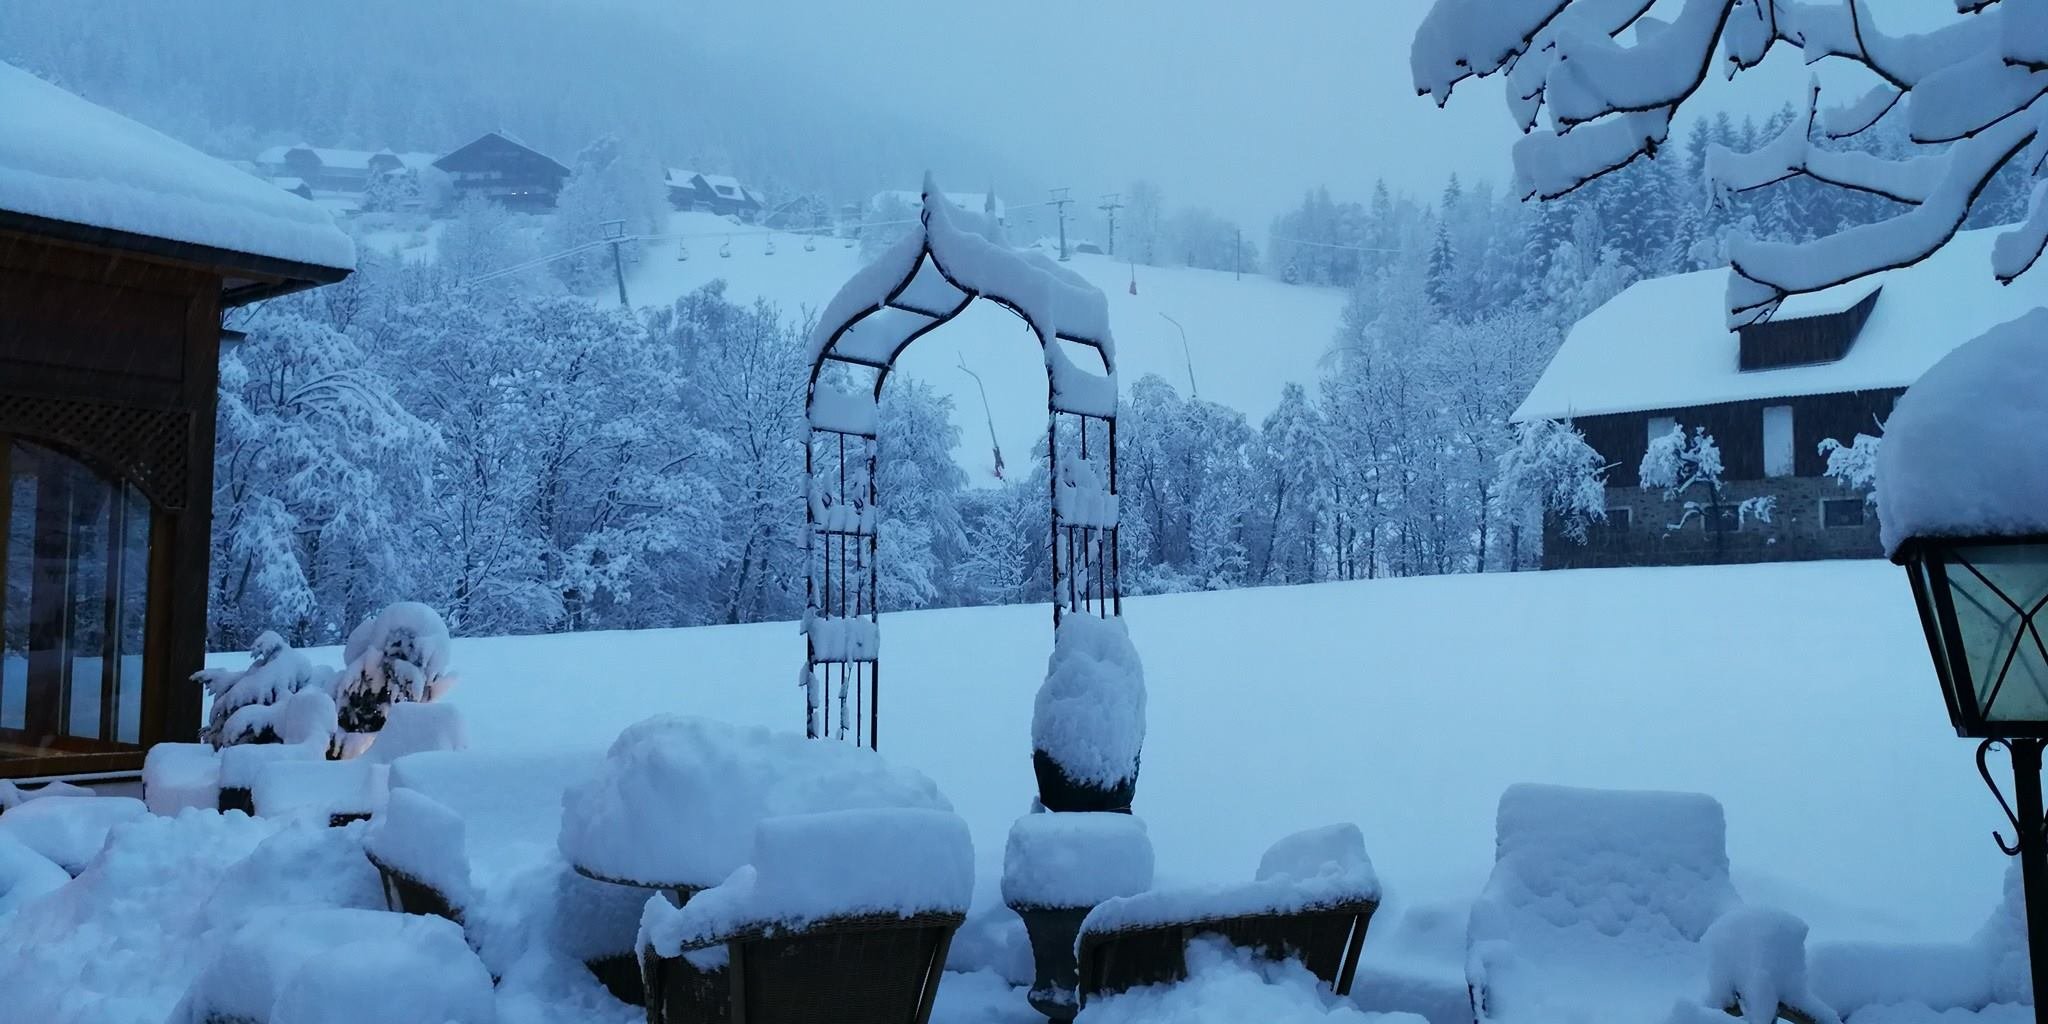 Genusshotel Almrausch - Bad Kleinkirchheim: ma reggelre 20 cm hó, de egész nap havazni fog